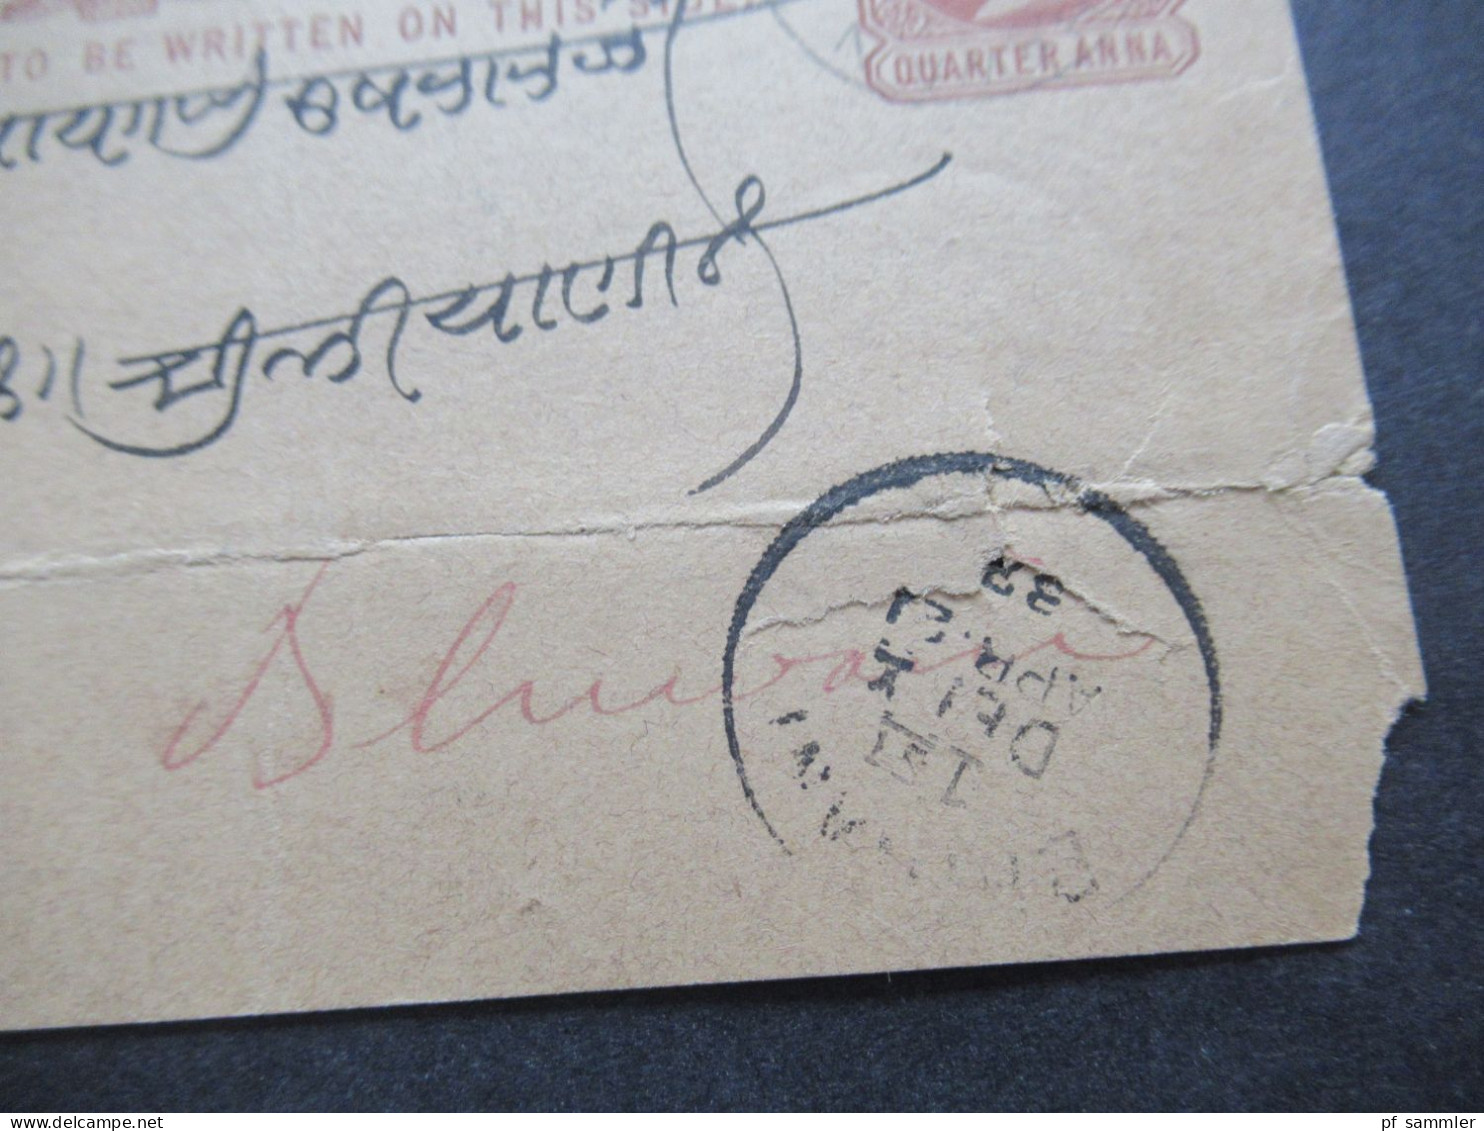 GB Kolonie Indien 3x Ganzsache 1887, 1904 und 1908 / India Post Card / East India Post Card / Interessant??